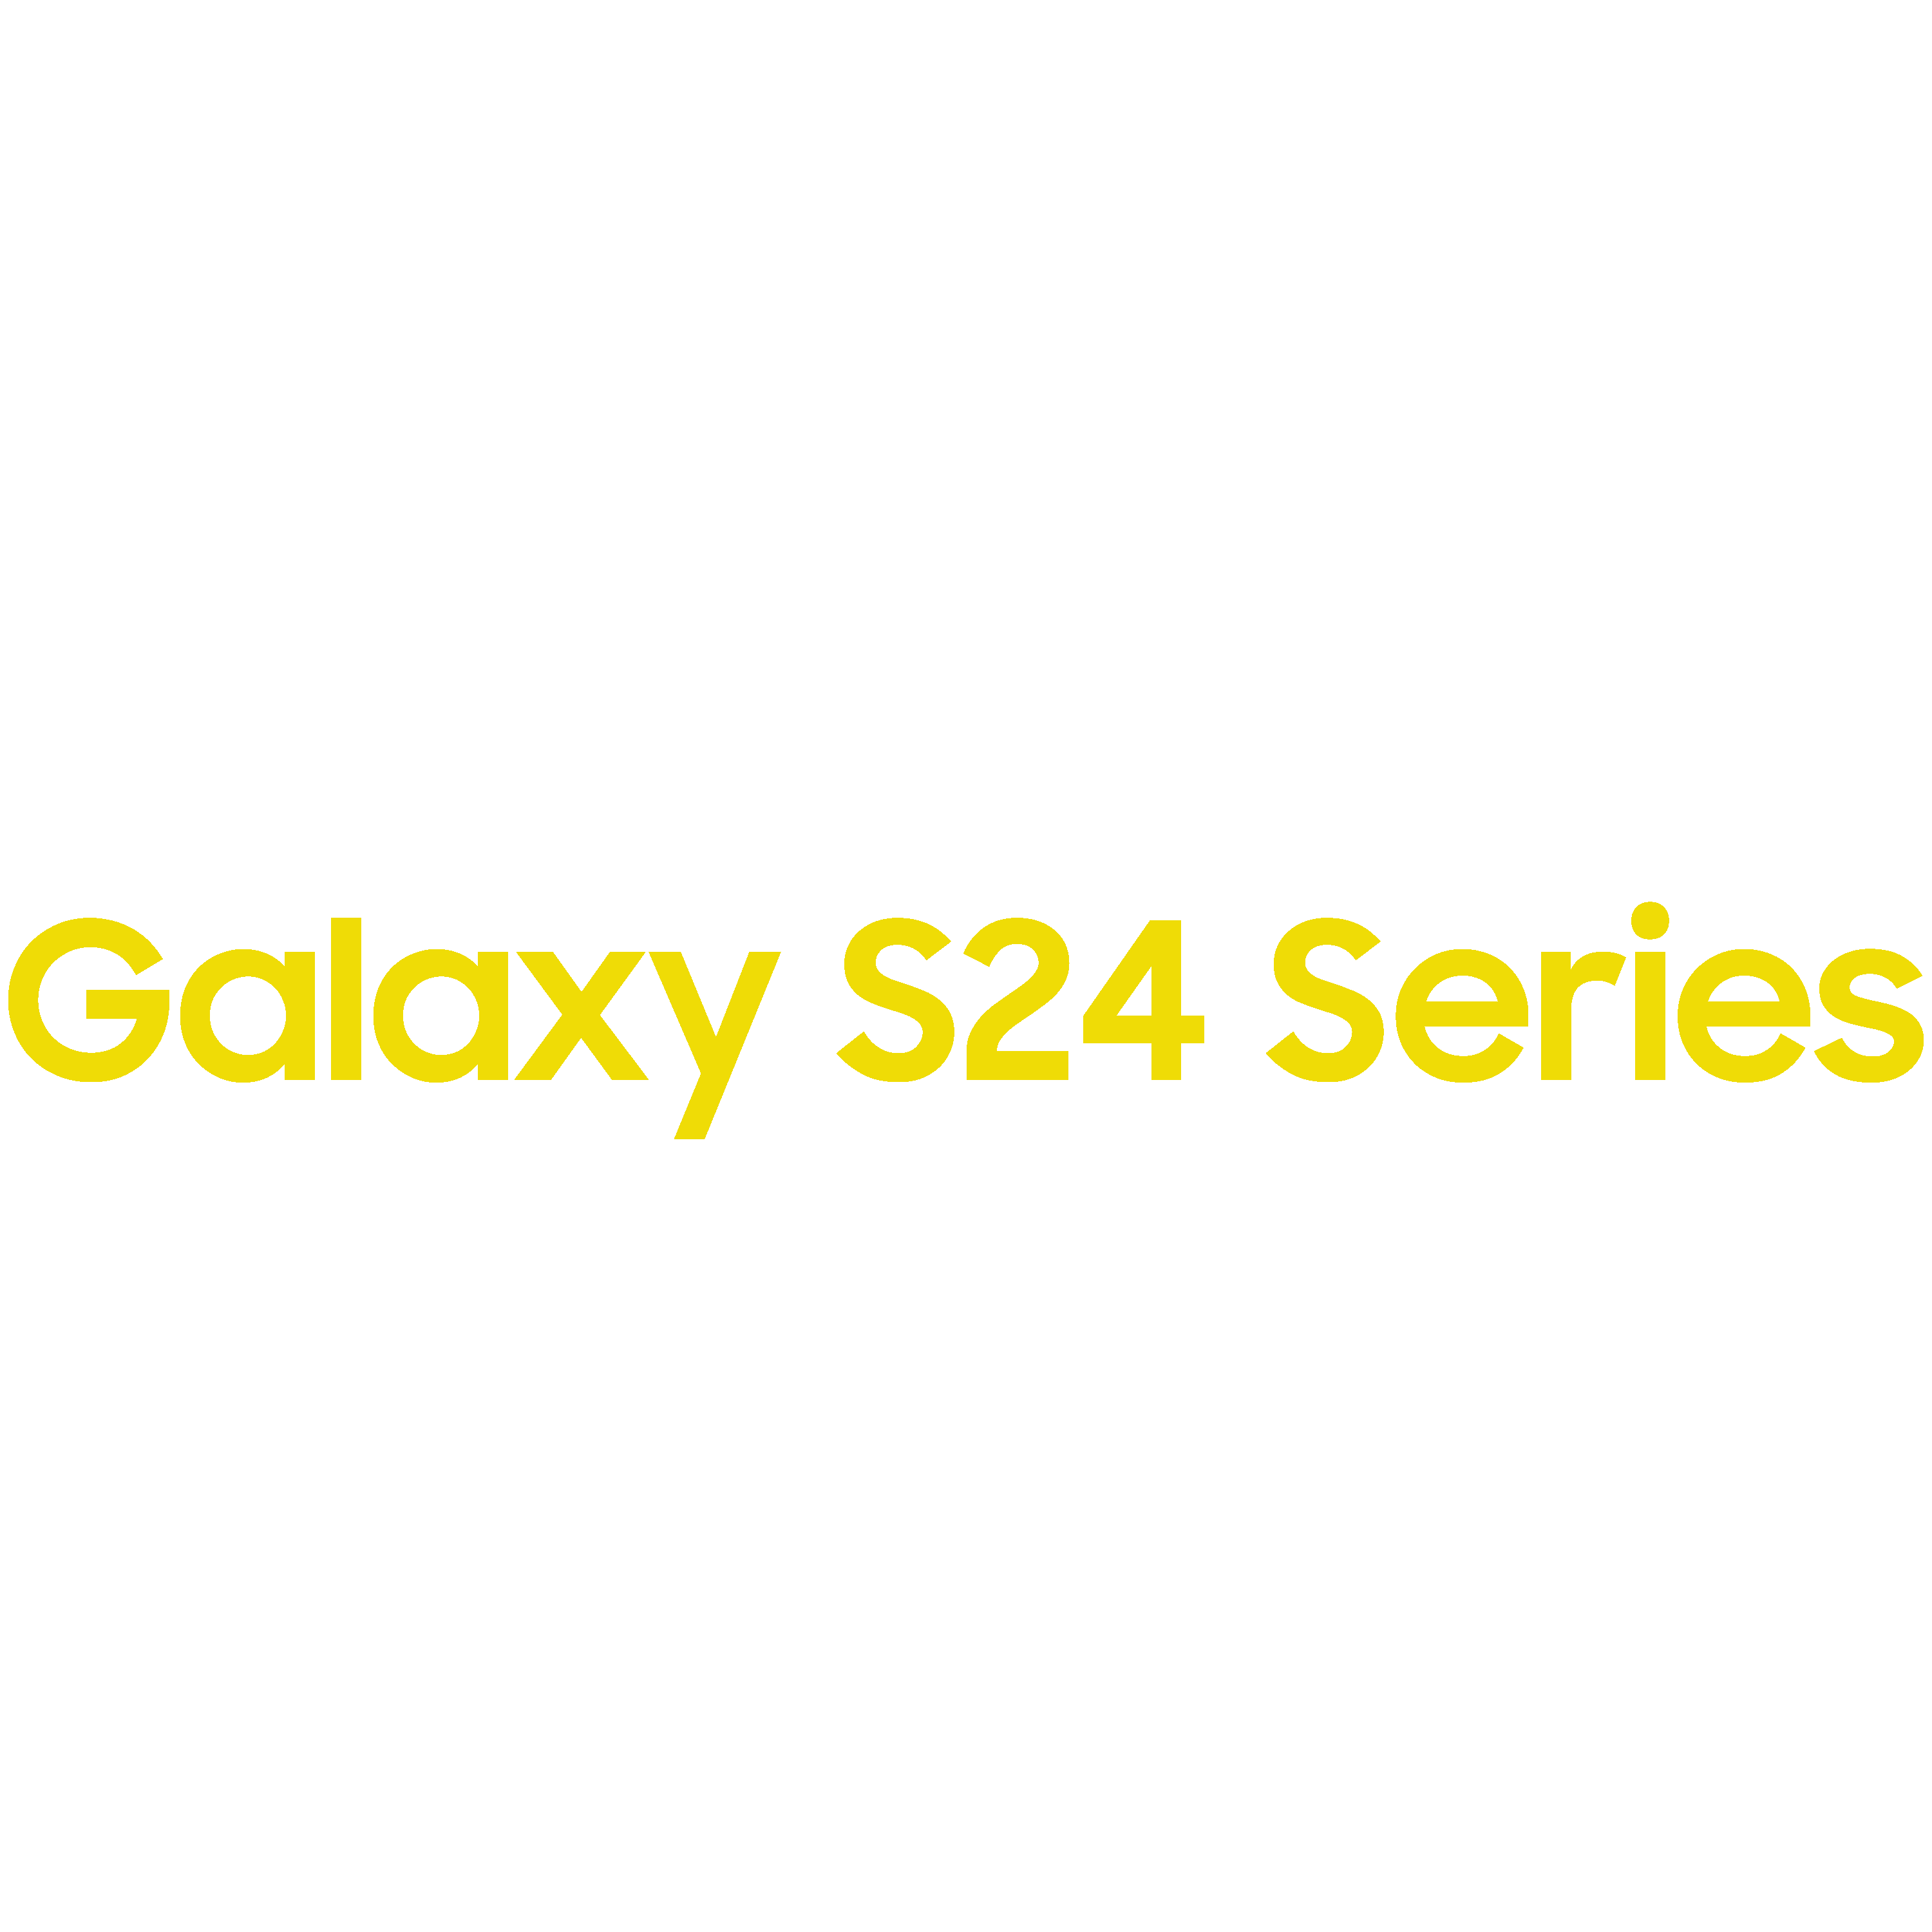 Galaxy S24 Series Logo  Transparent Gallery